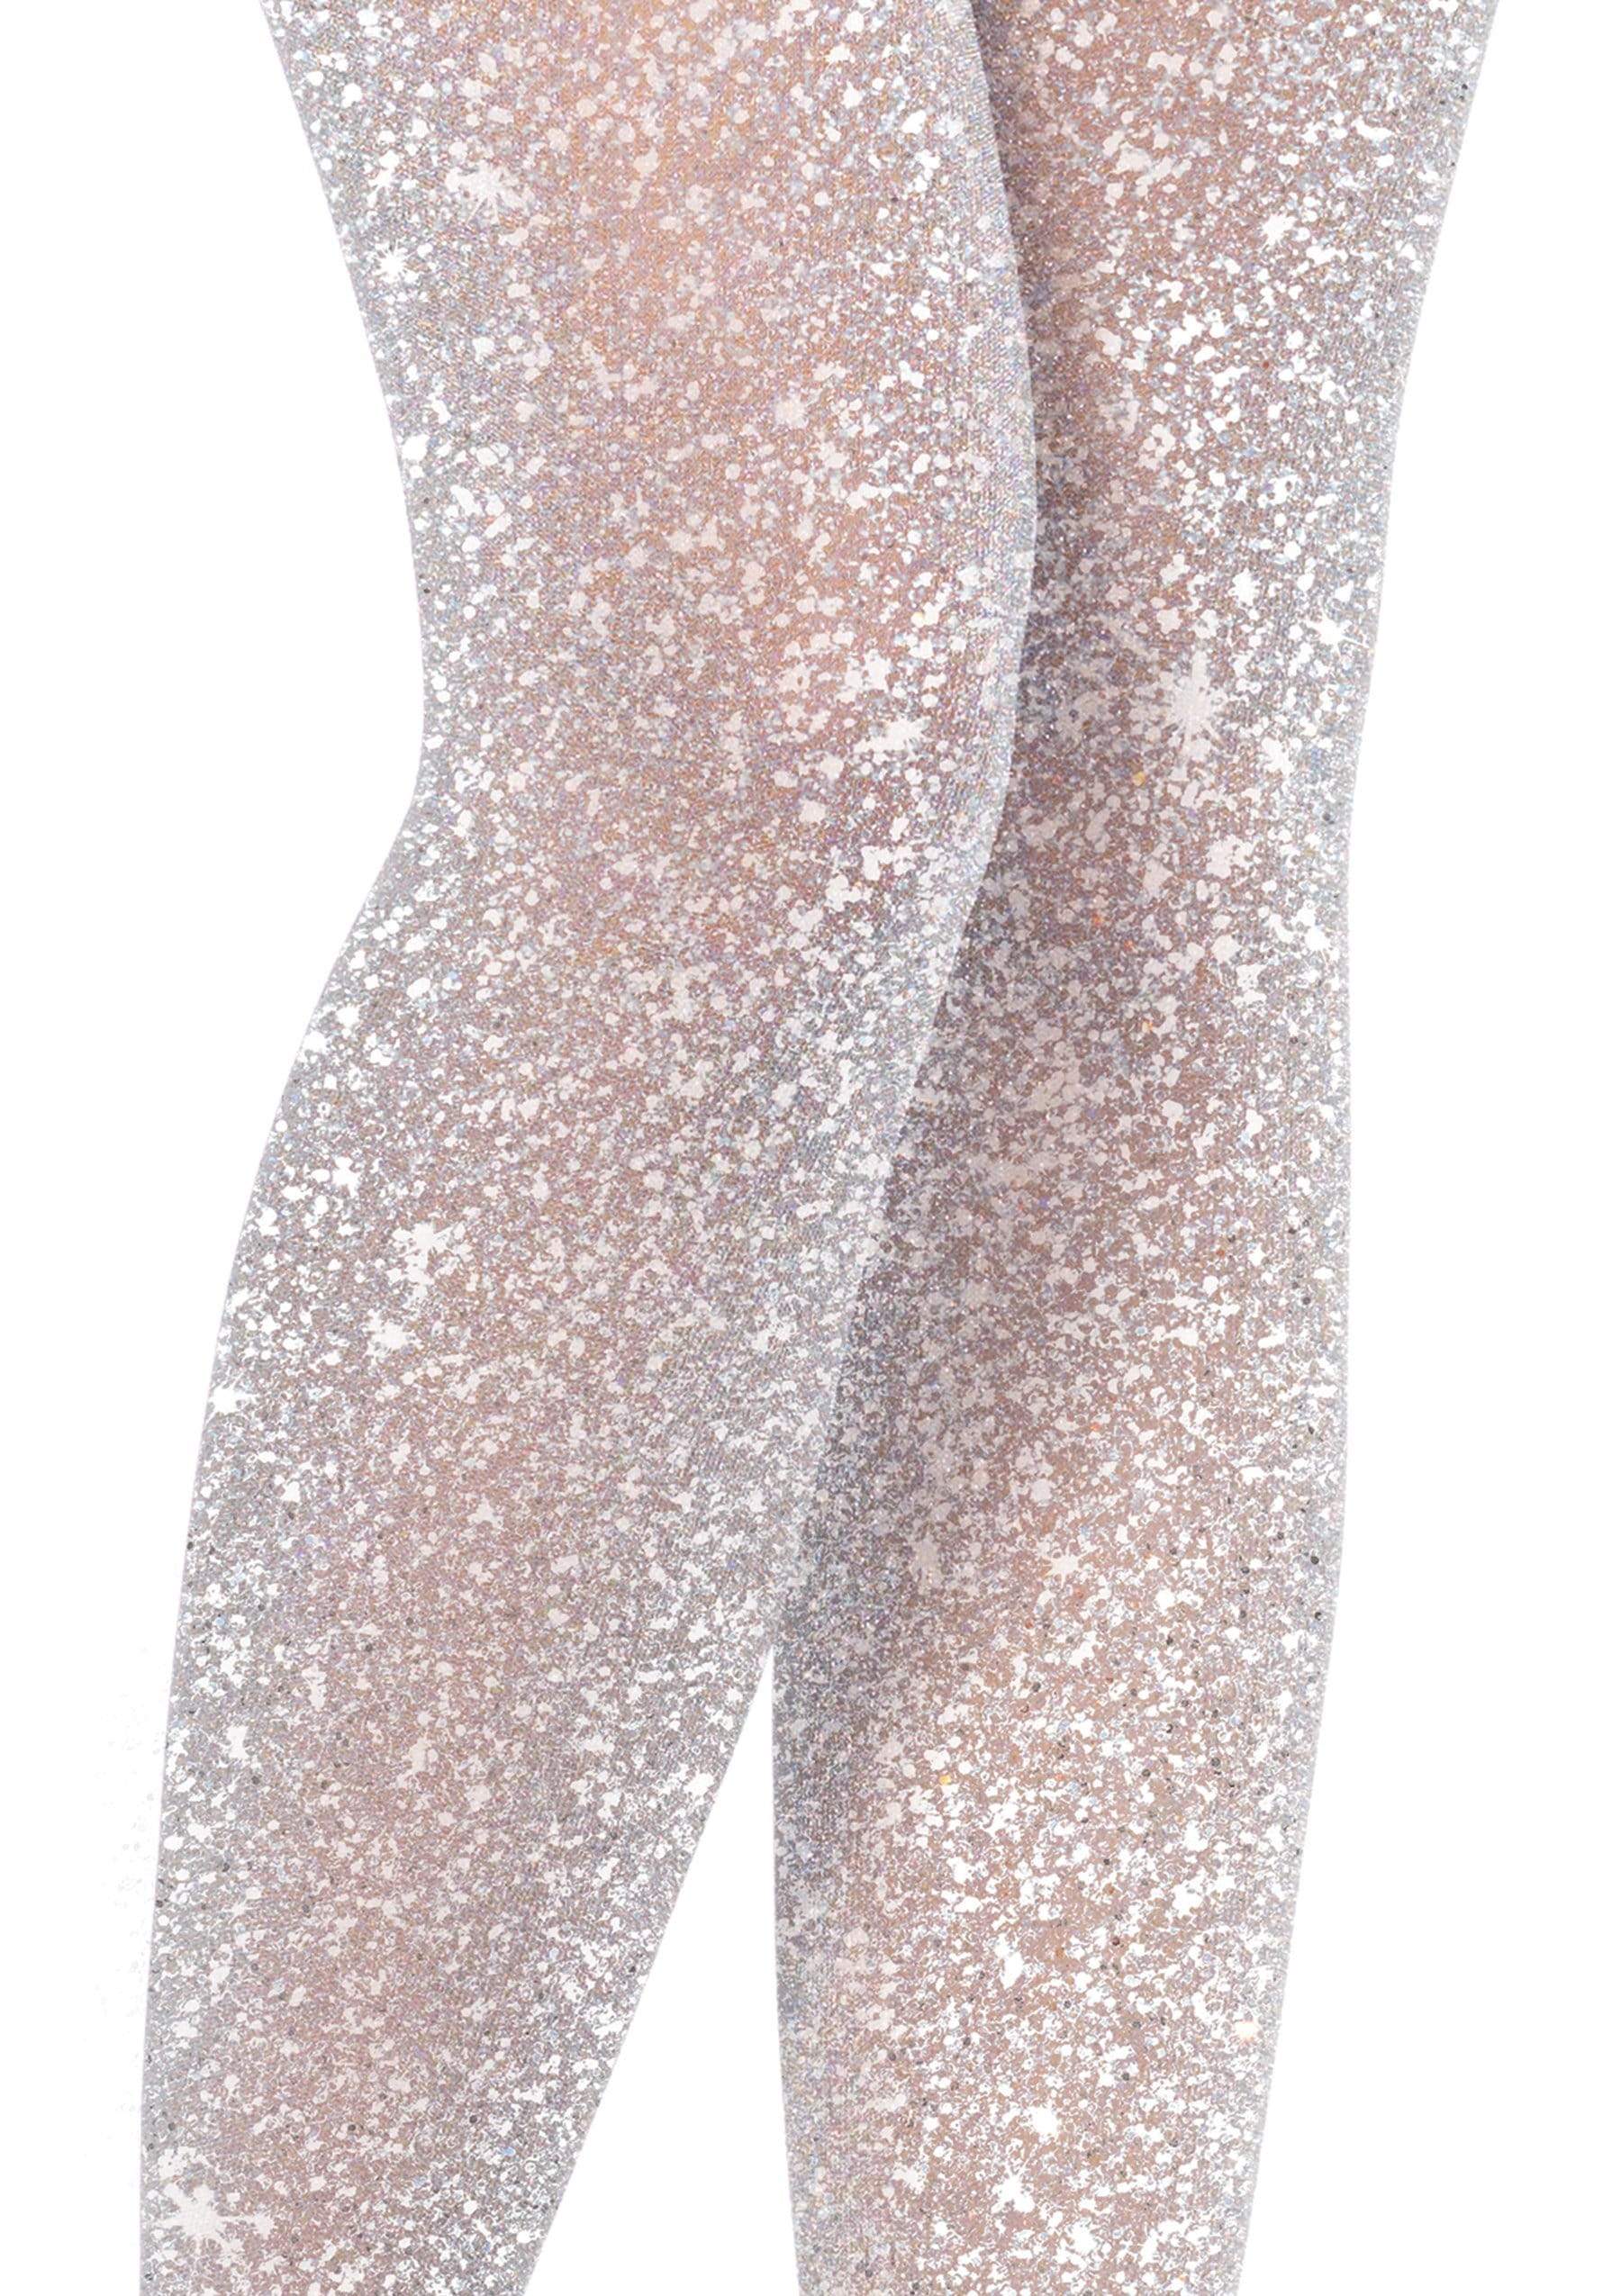 Sugar Sunday Shimmer Glitter Tights for Women Metallic Sparkle